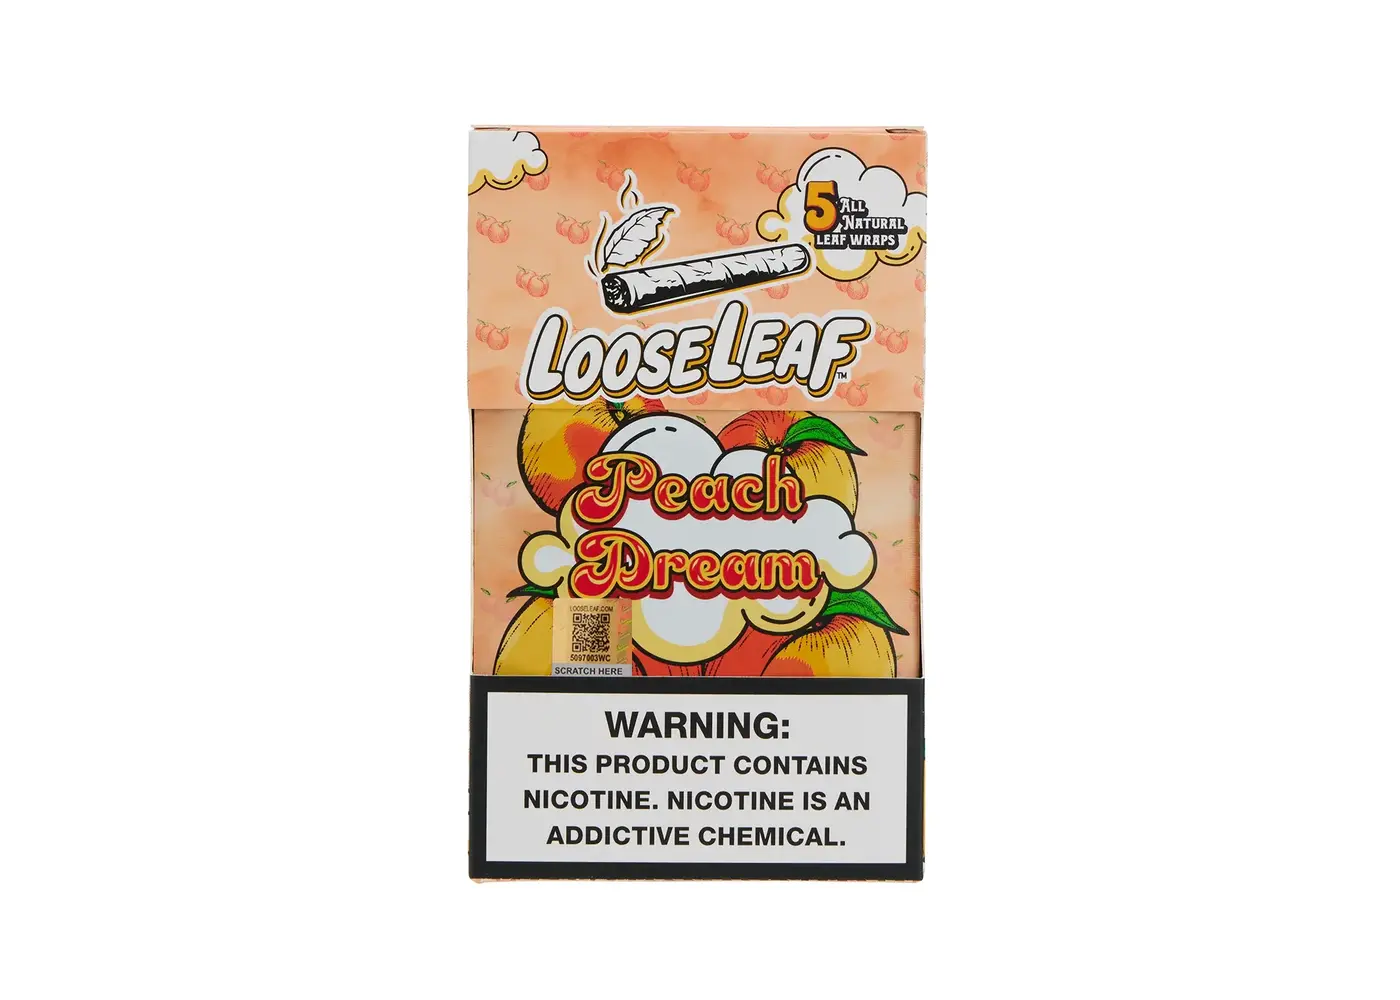 Loose Leaf 5 Pack